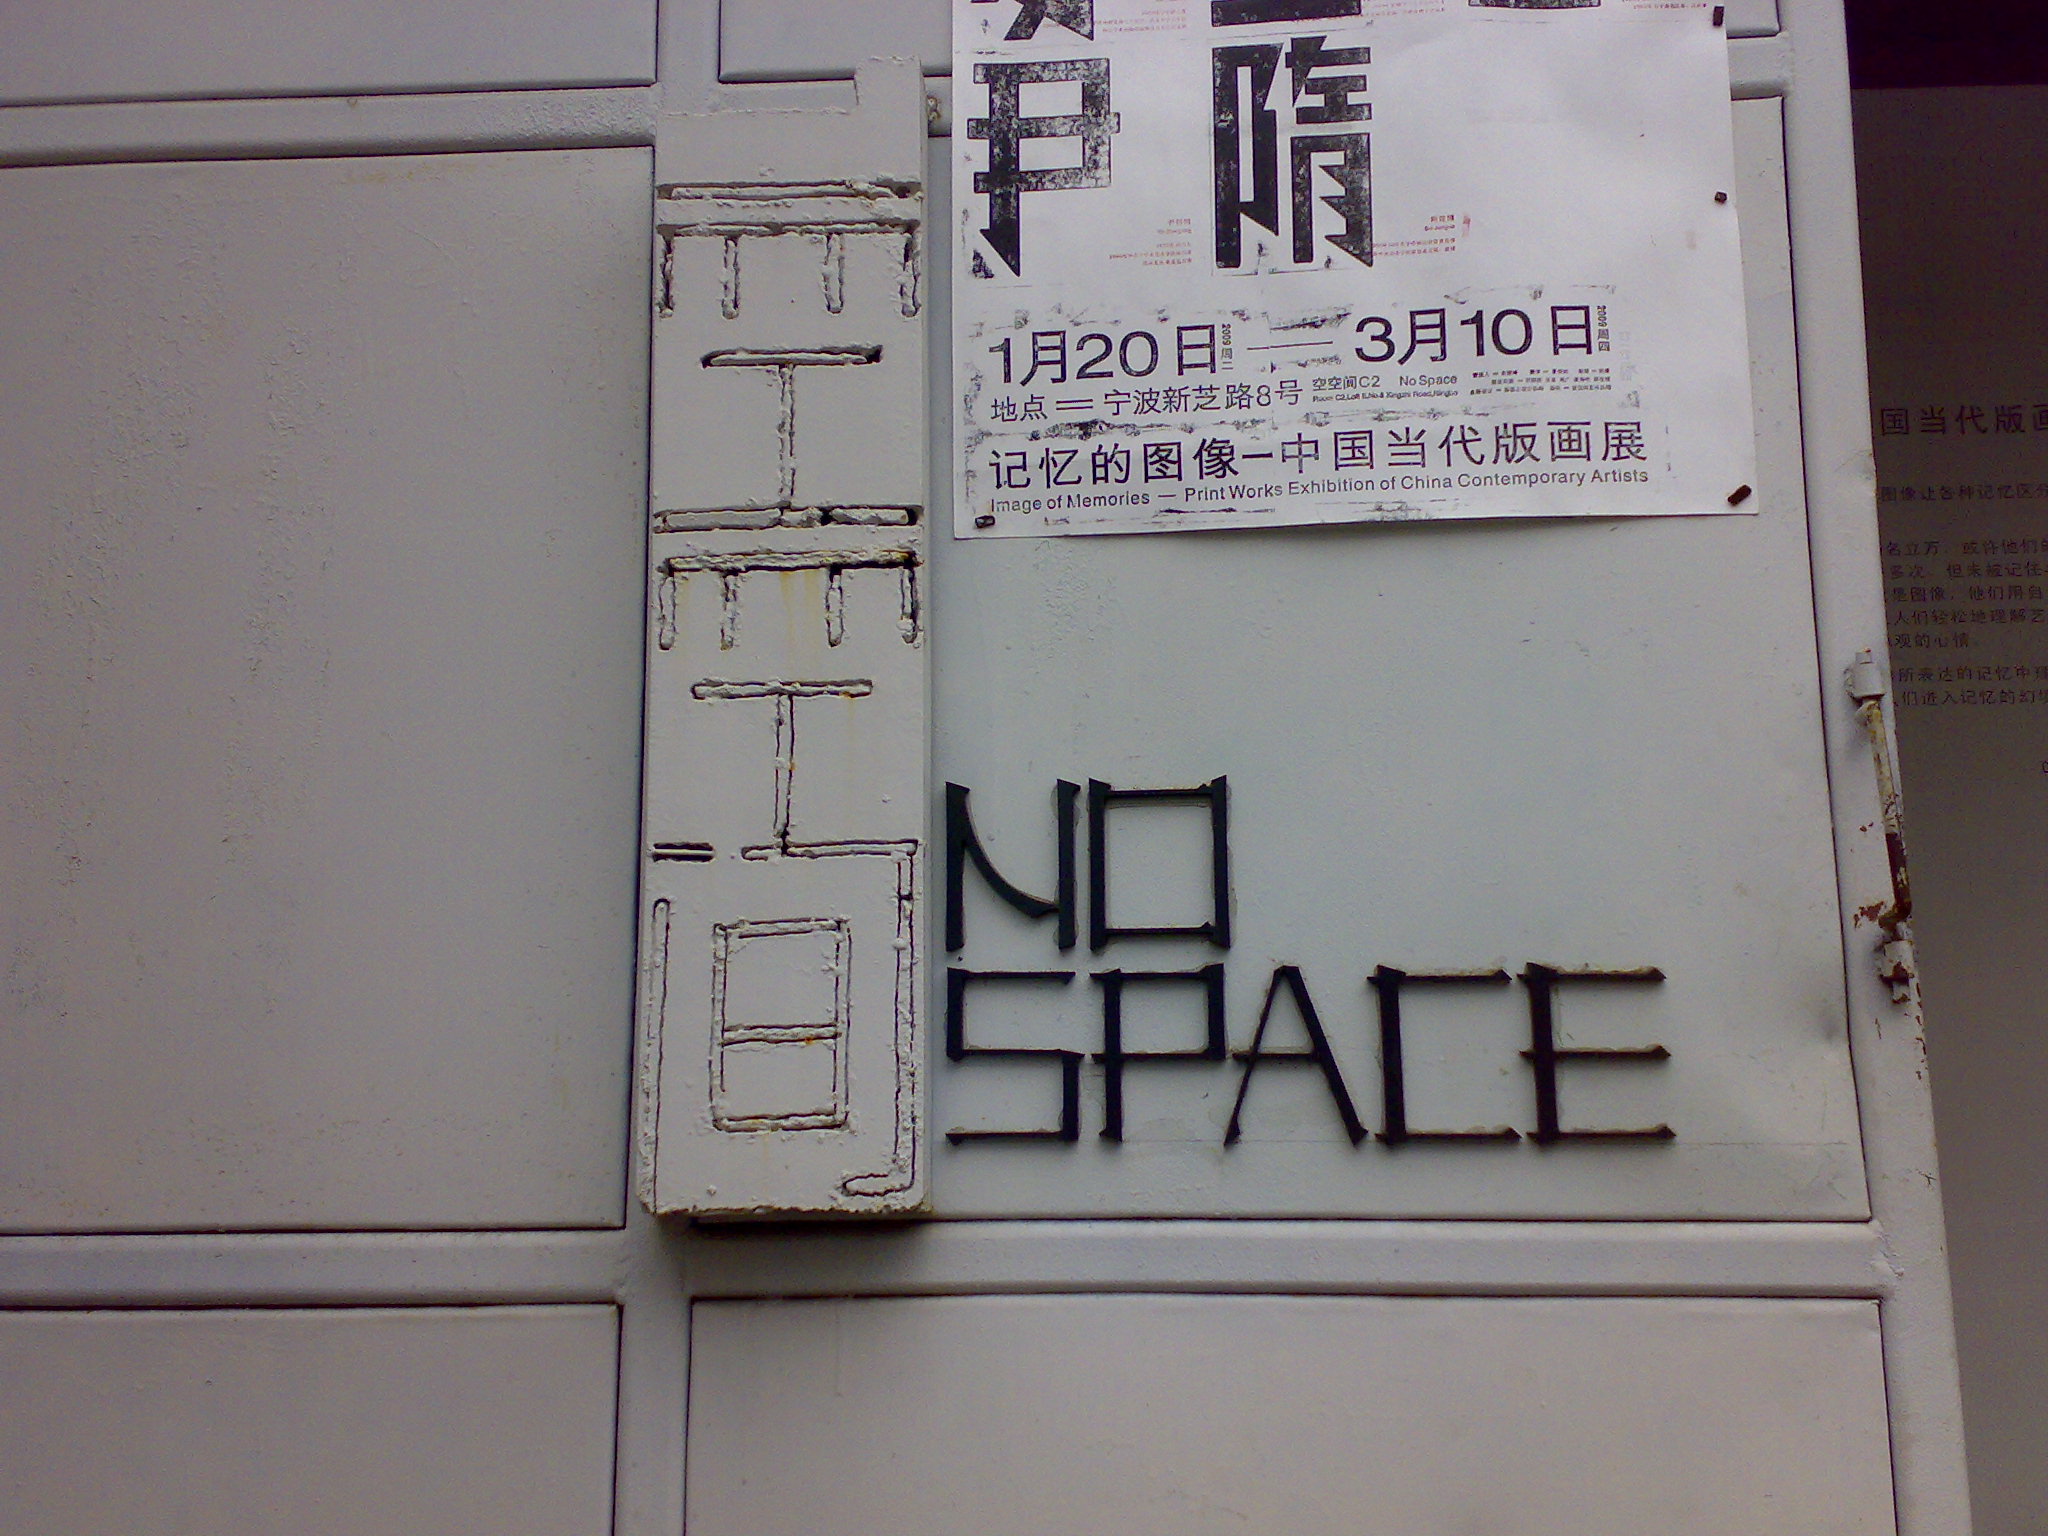 Another design studio:no space